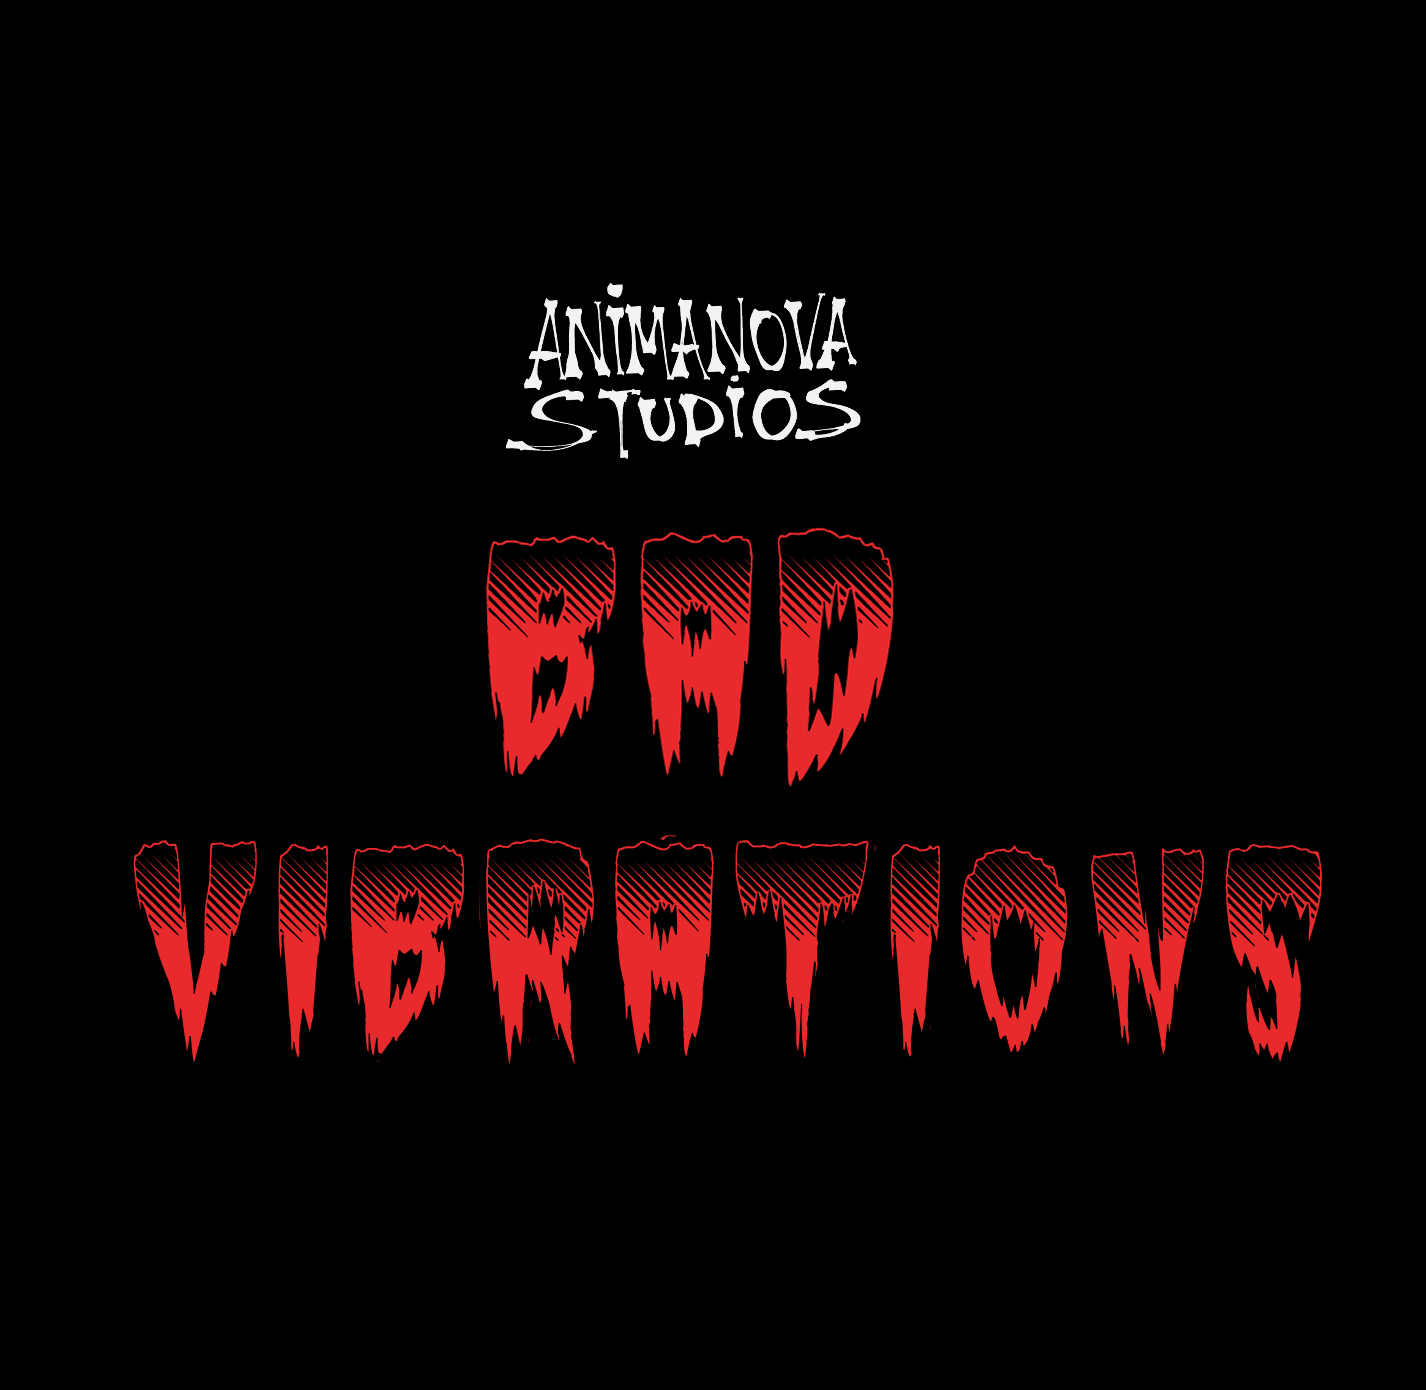 BAD VIBRATIONS